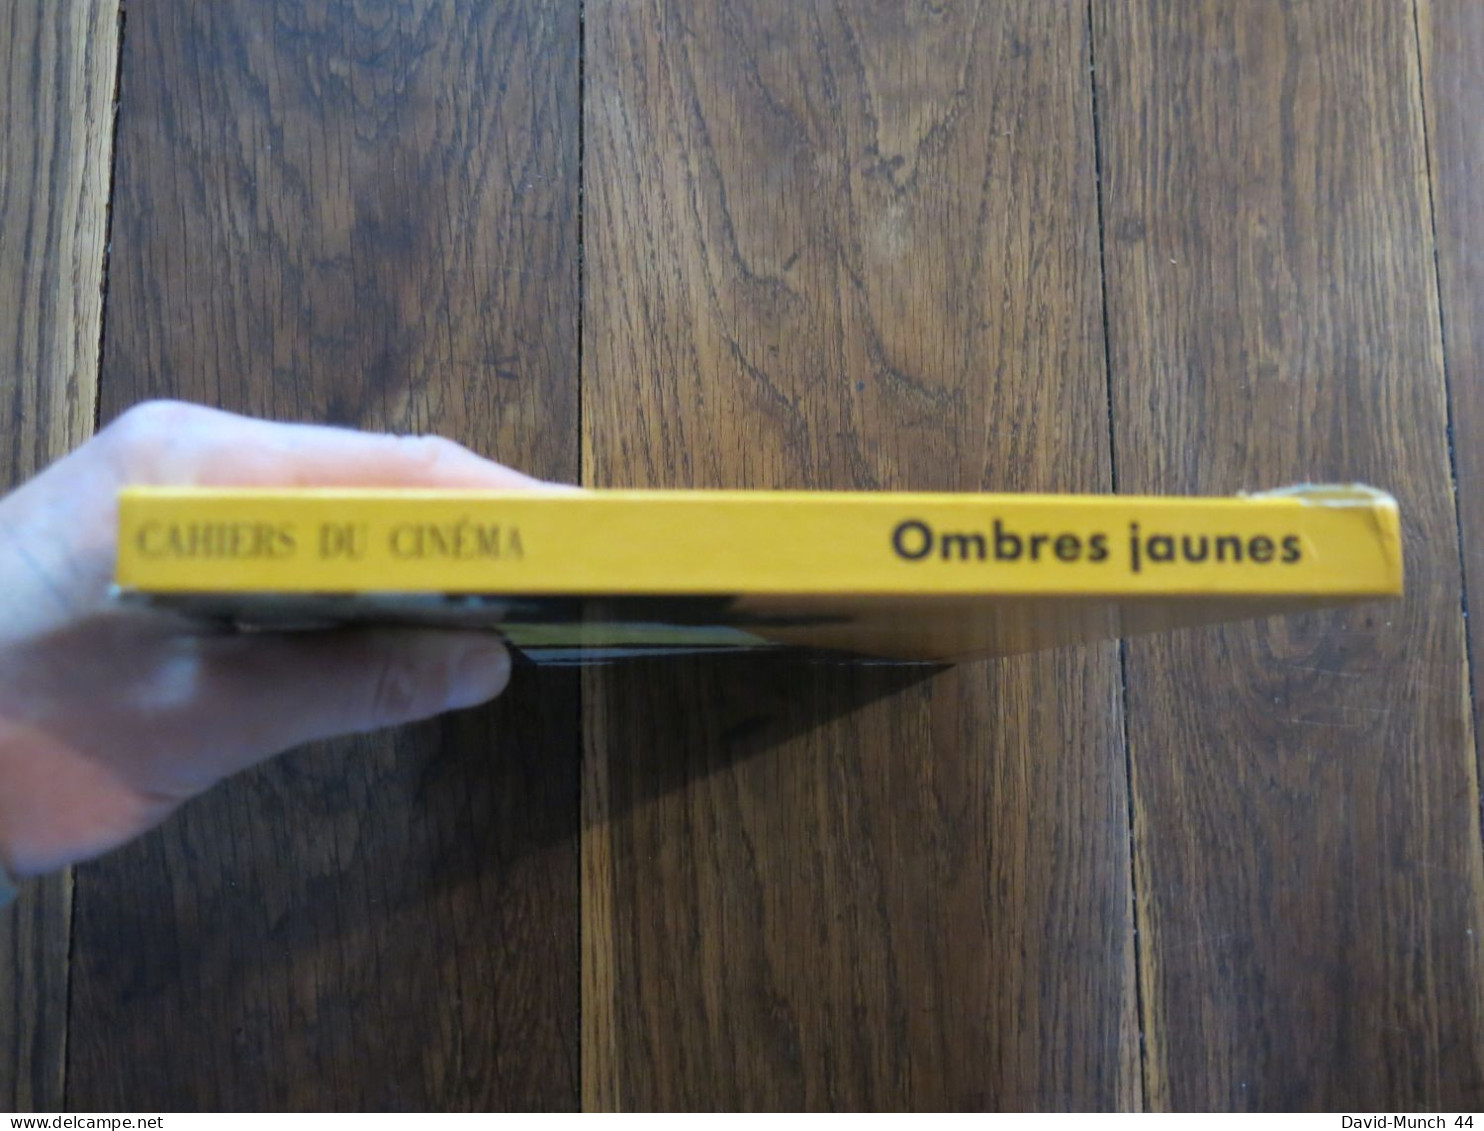 Ombres Jaunes, Journal De Tournage " Le Dernier Empereur " De Bernardo Bertolucci De F.S. Gérard. Cahiers Du Cinéma.1987 - Kino/Fernsehen